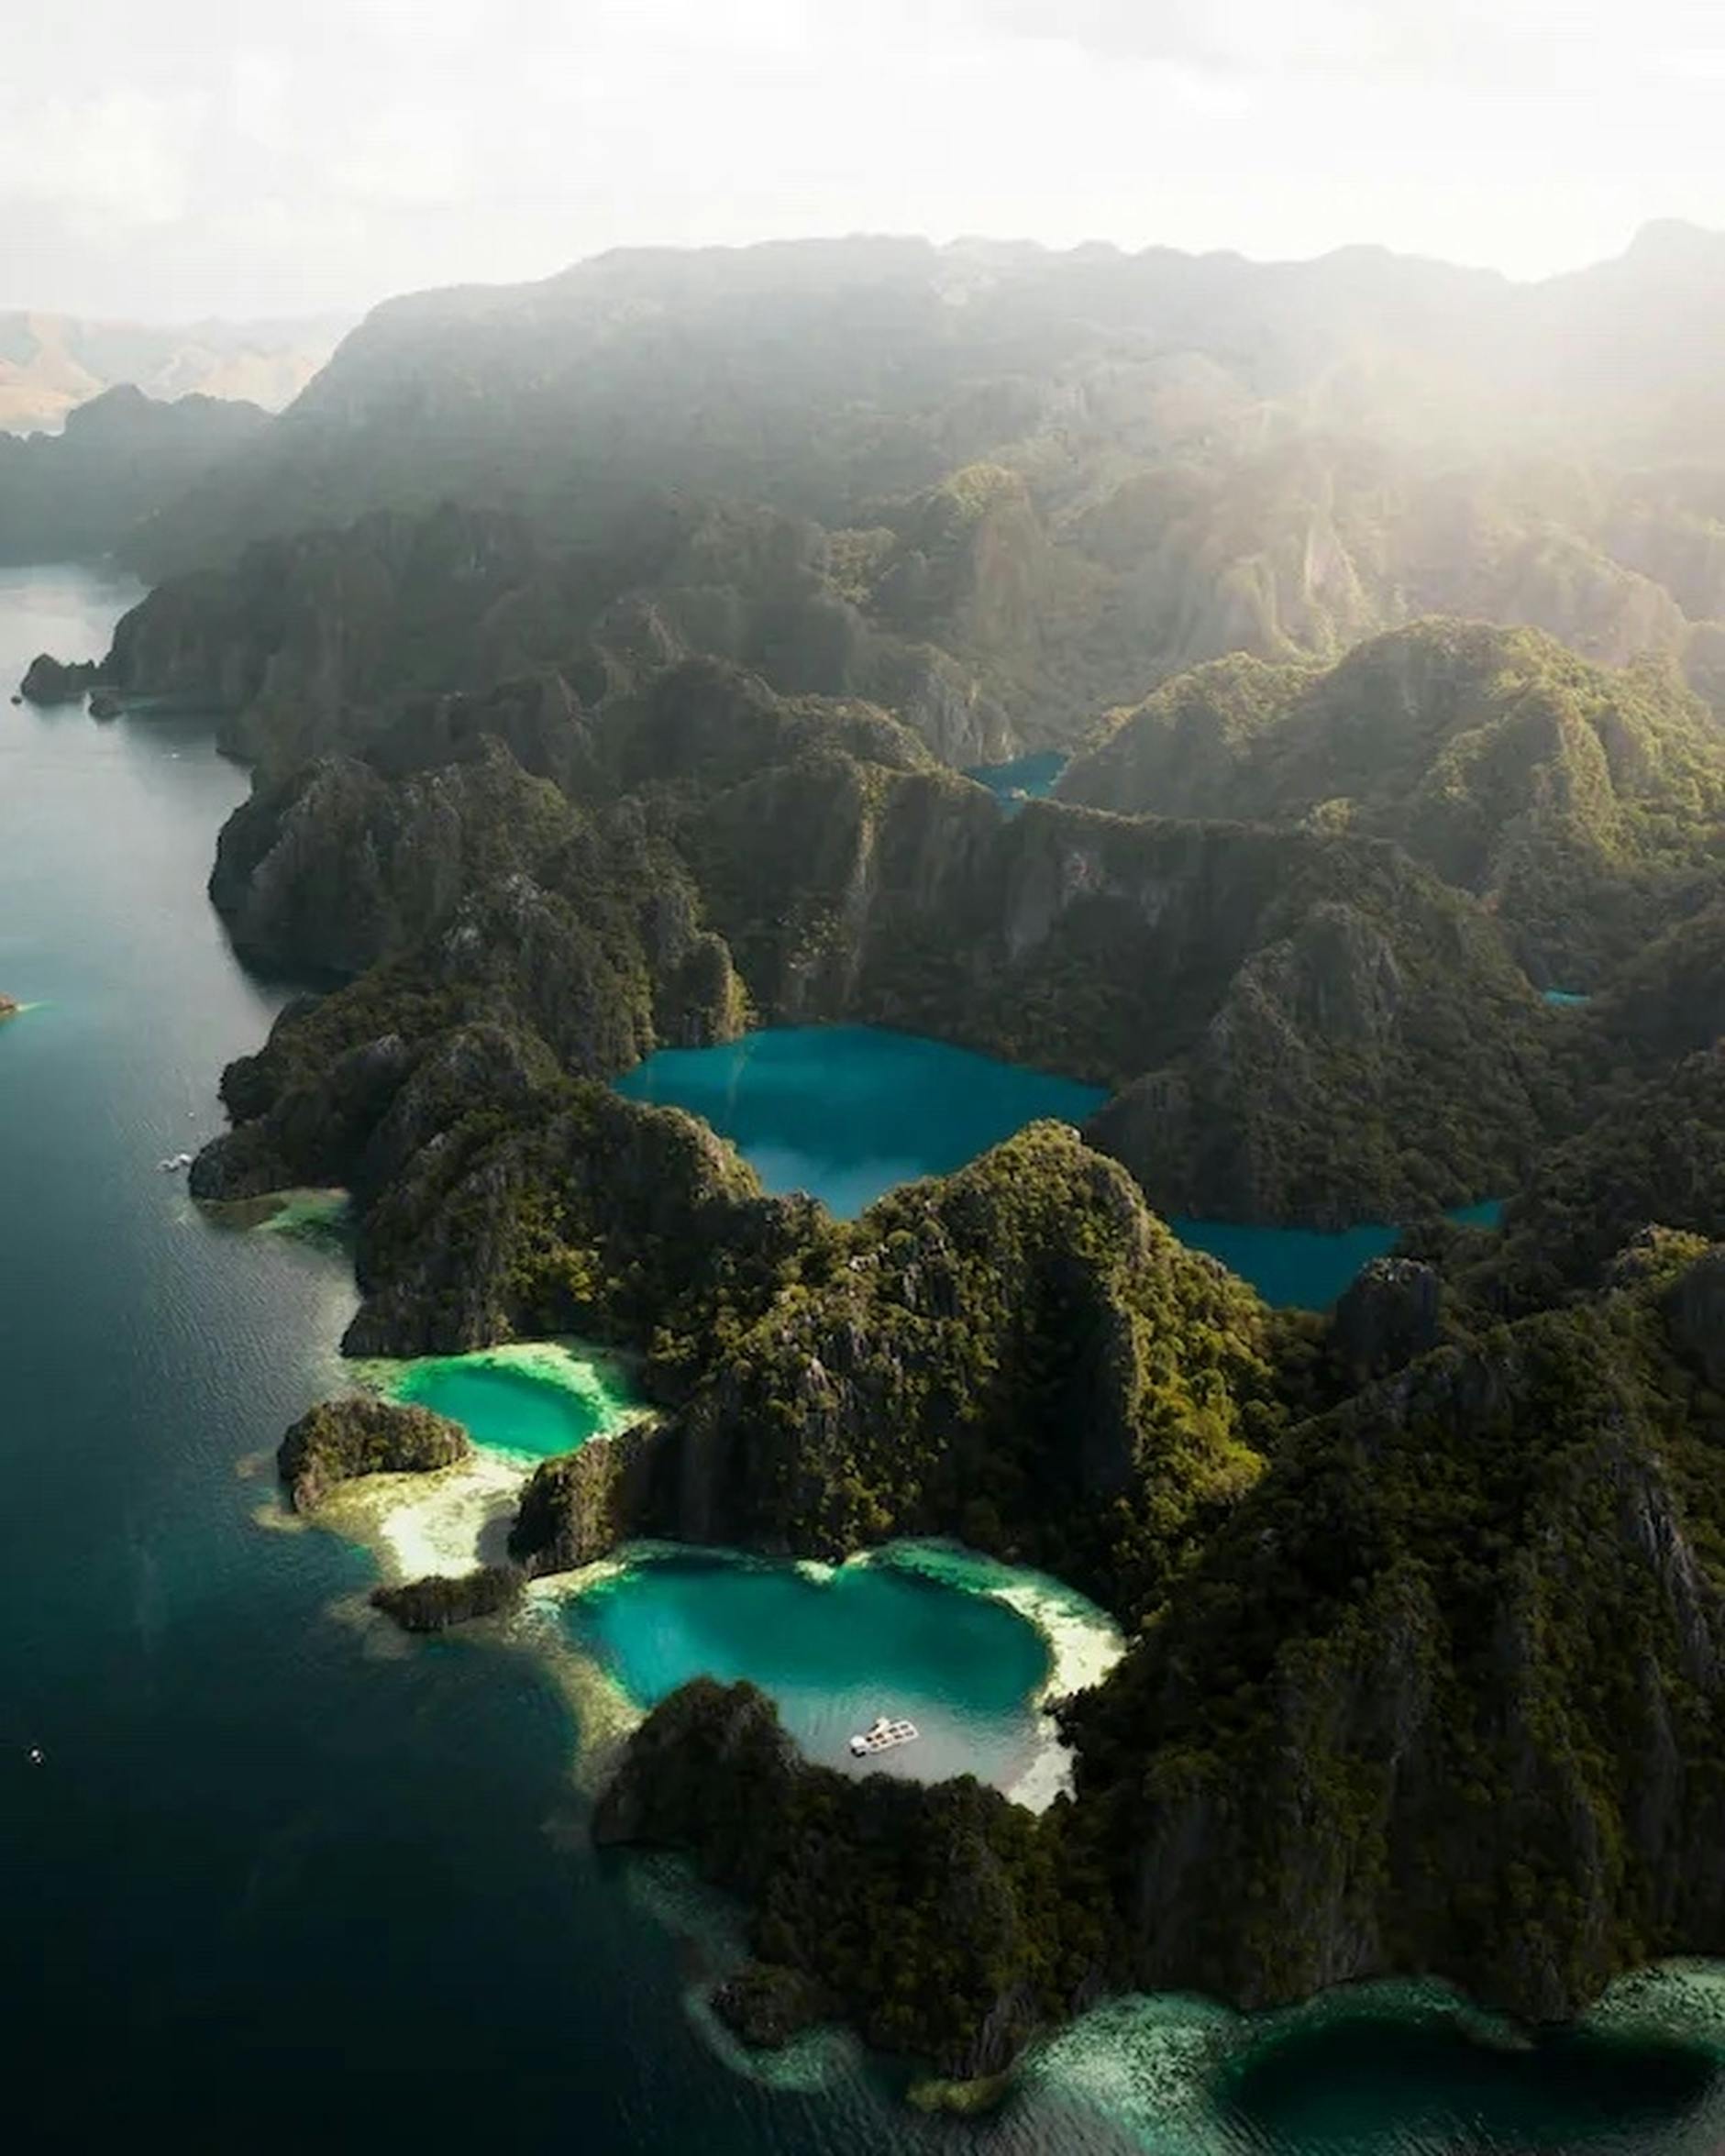 Palawan, Philippines. Image by Jake Irish on Unsplash.